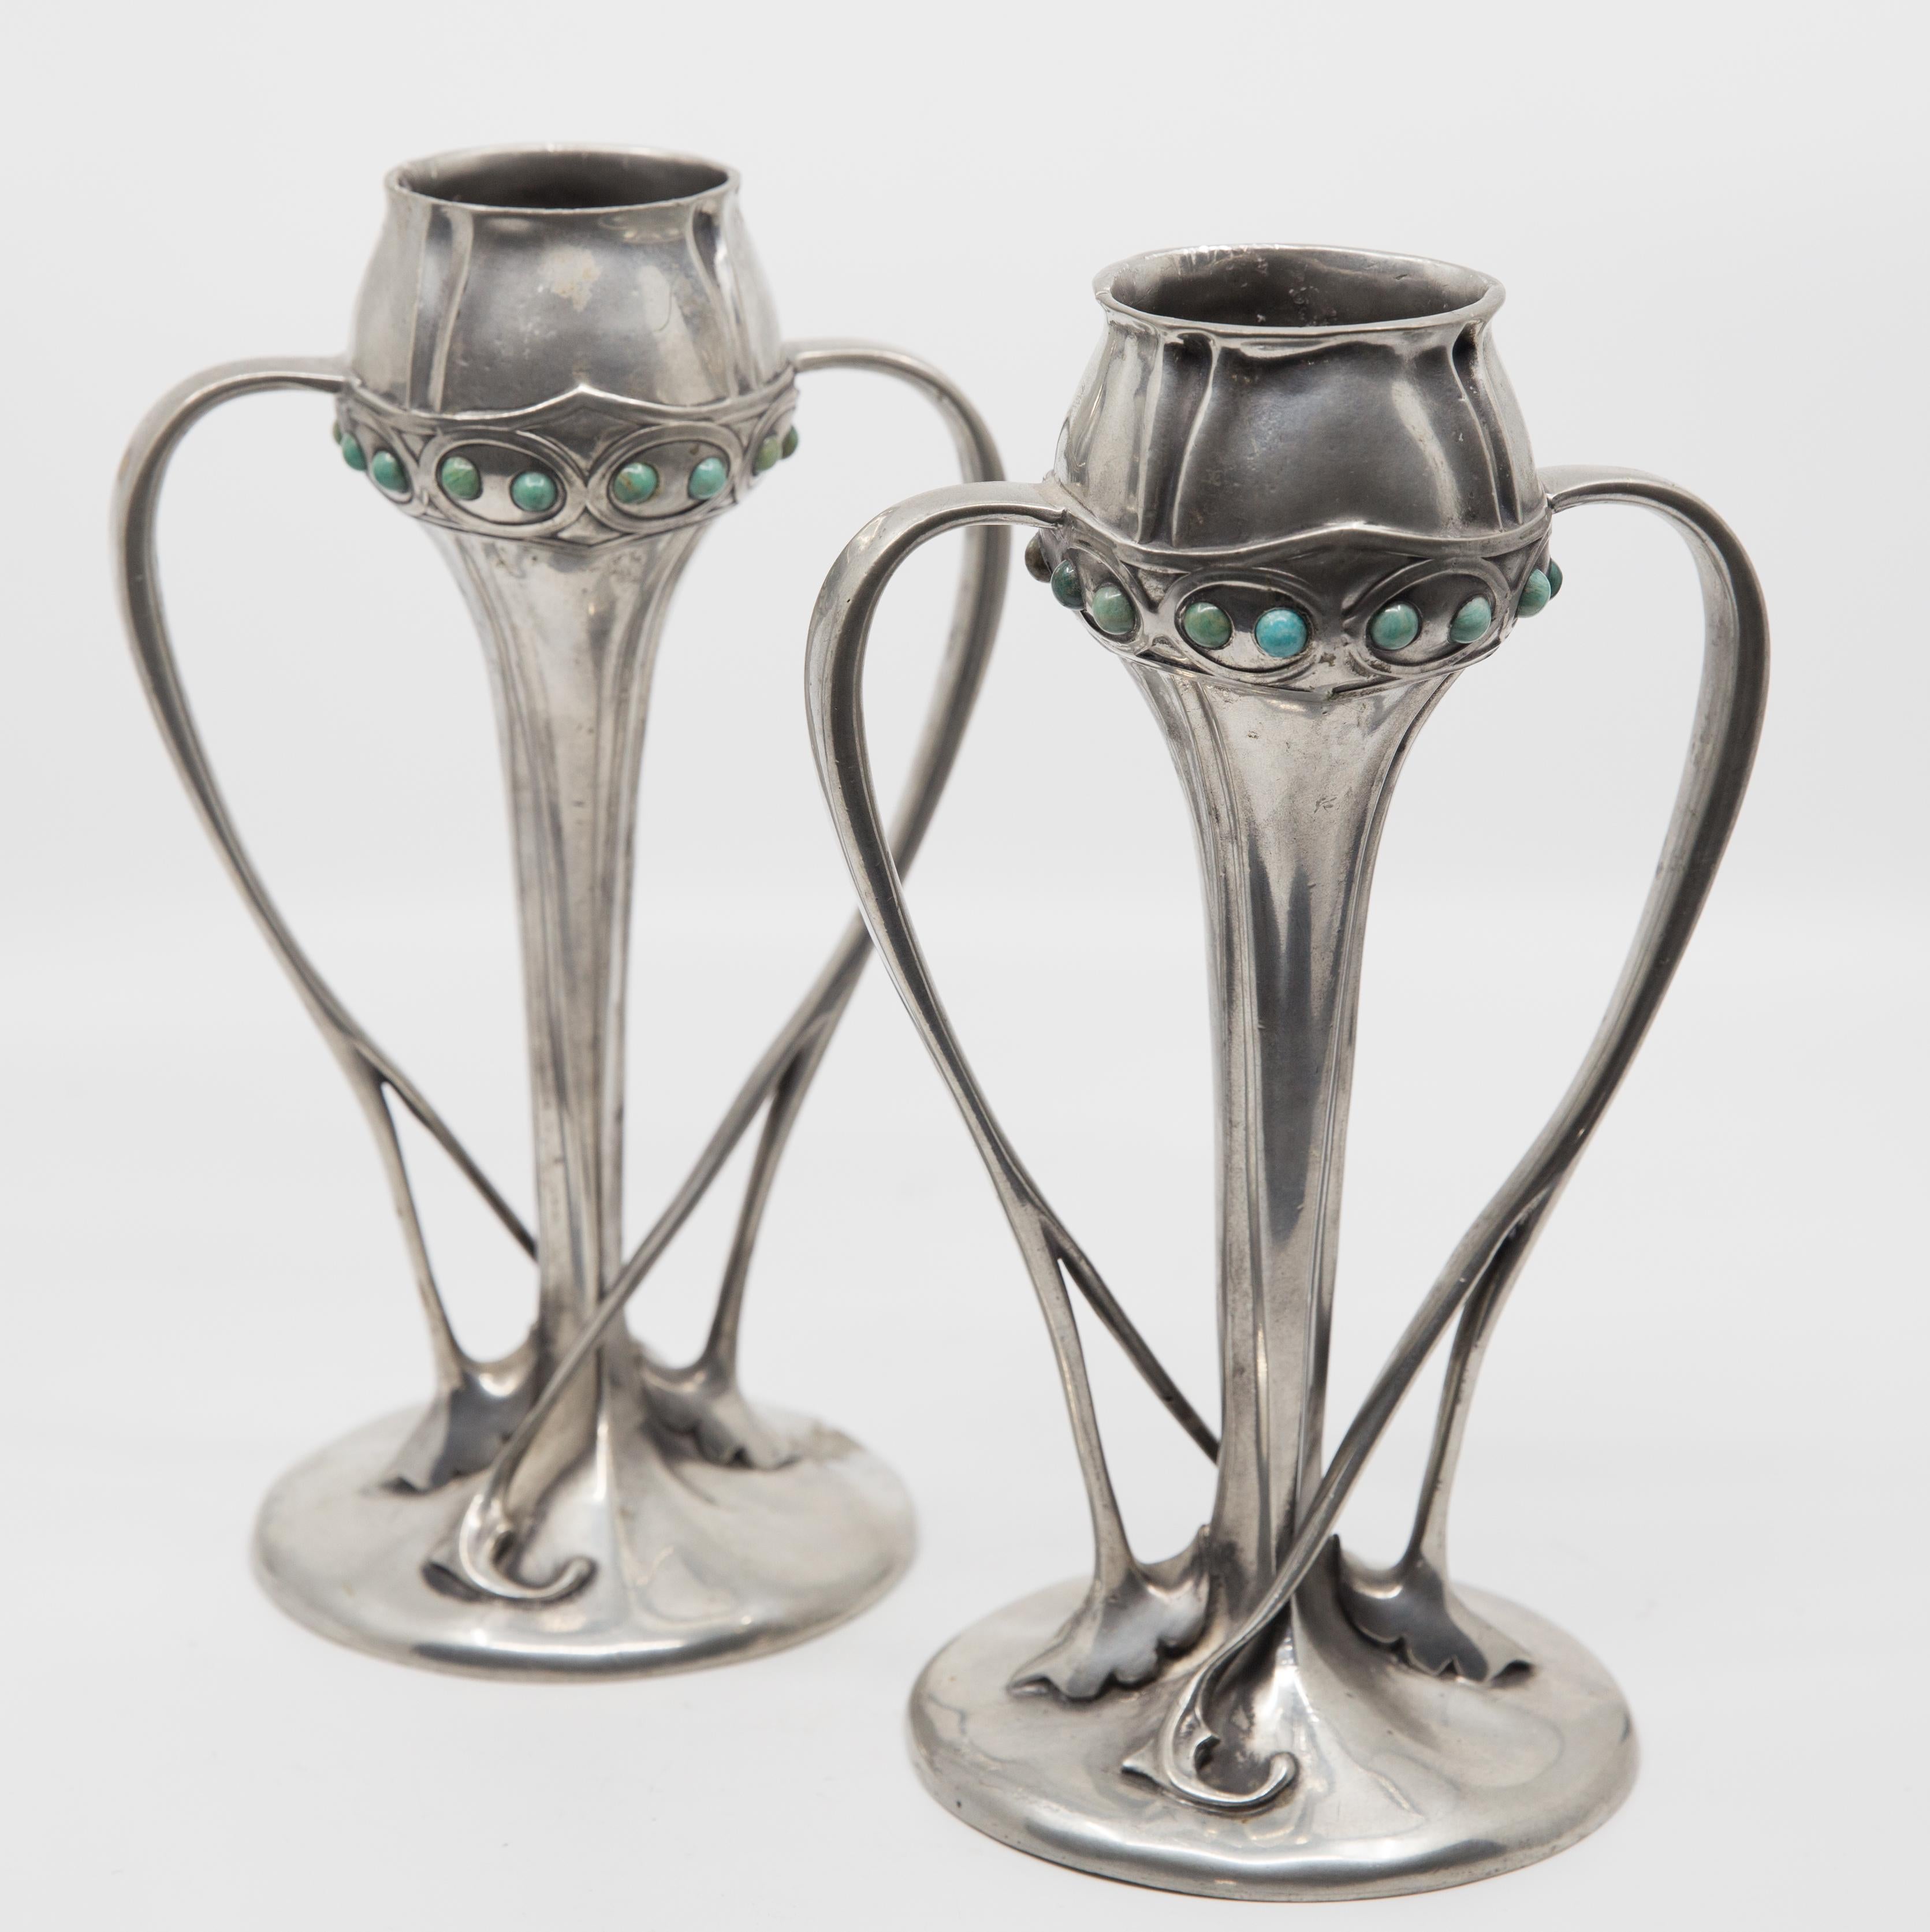 British Liberty Tudric Art Nouveau Pewter Vases with Enameled Cabochon Jewels circa 1920